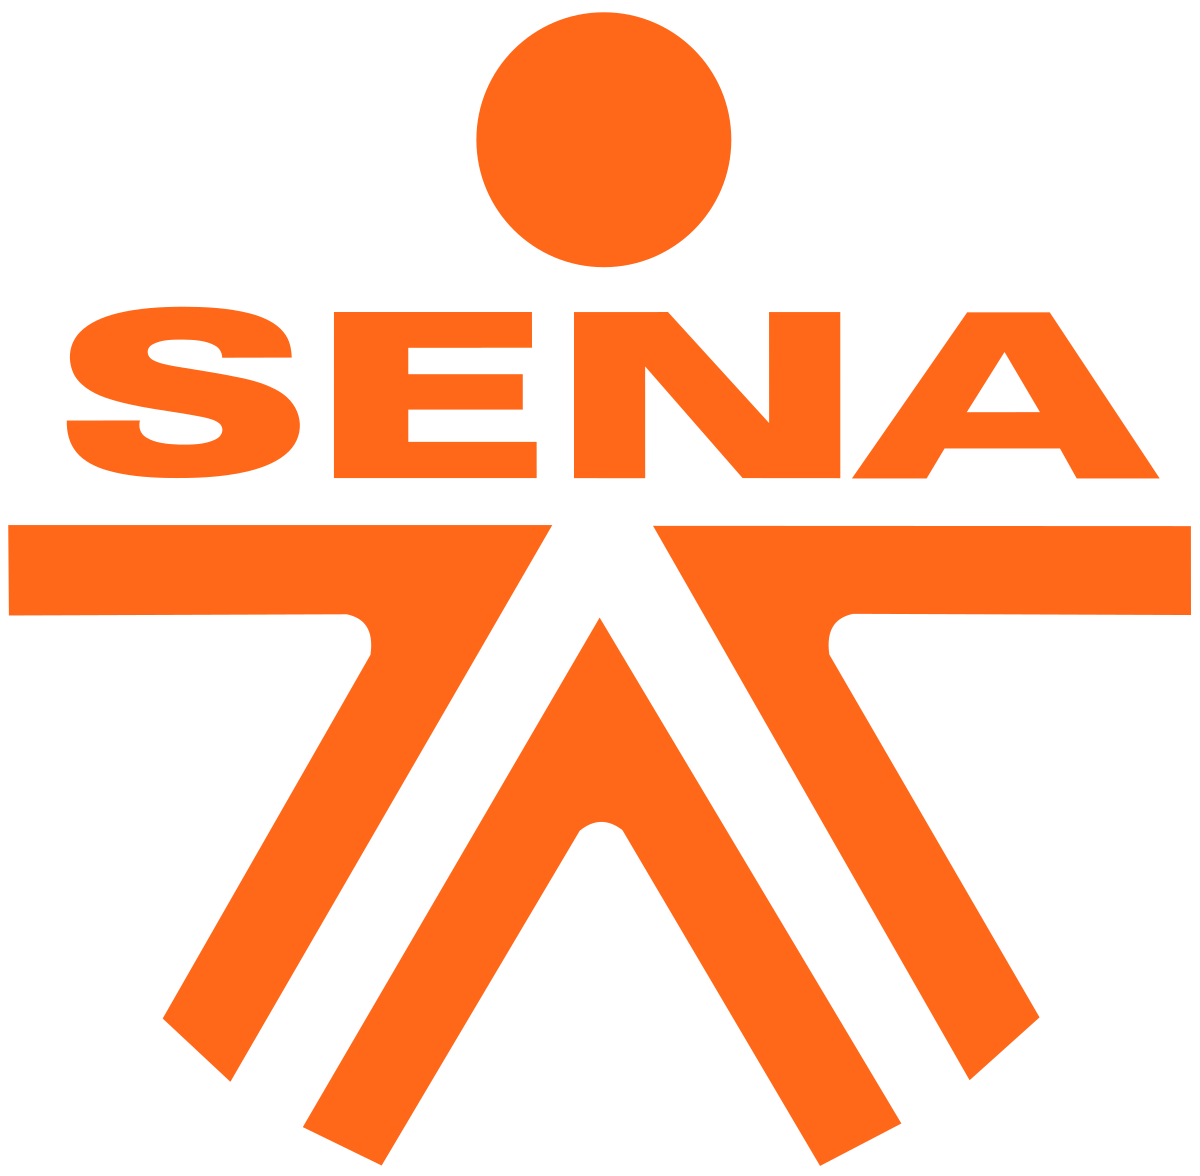 SENA - Servicio Nacional de Aprendizaje